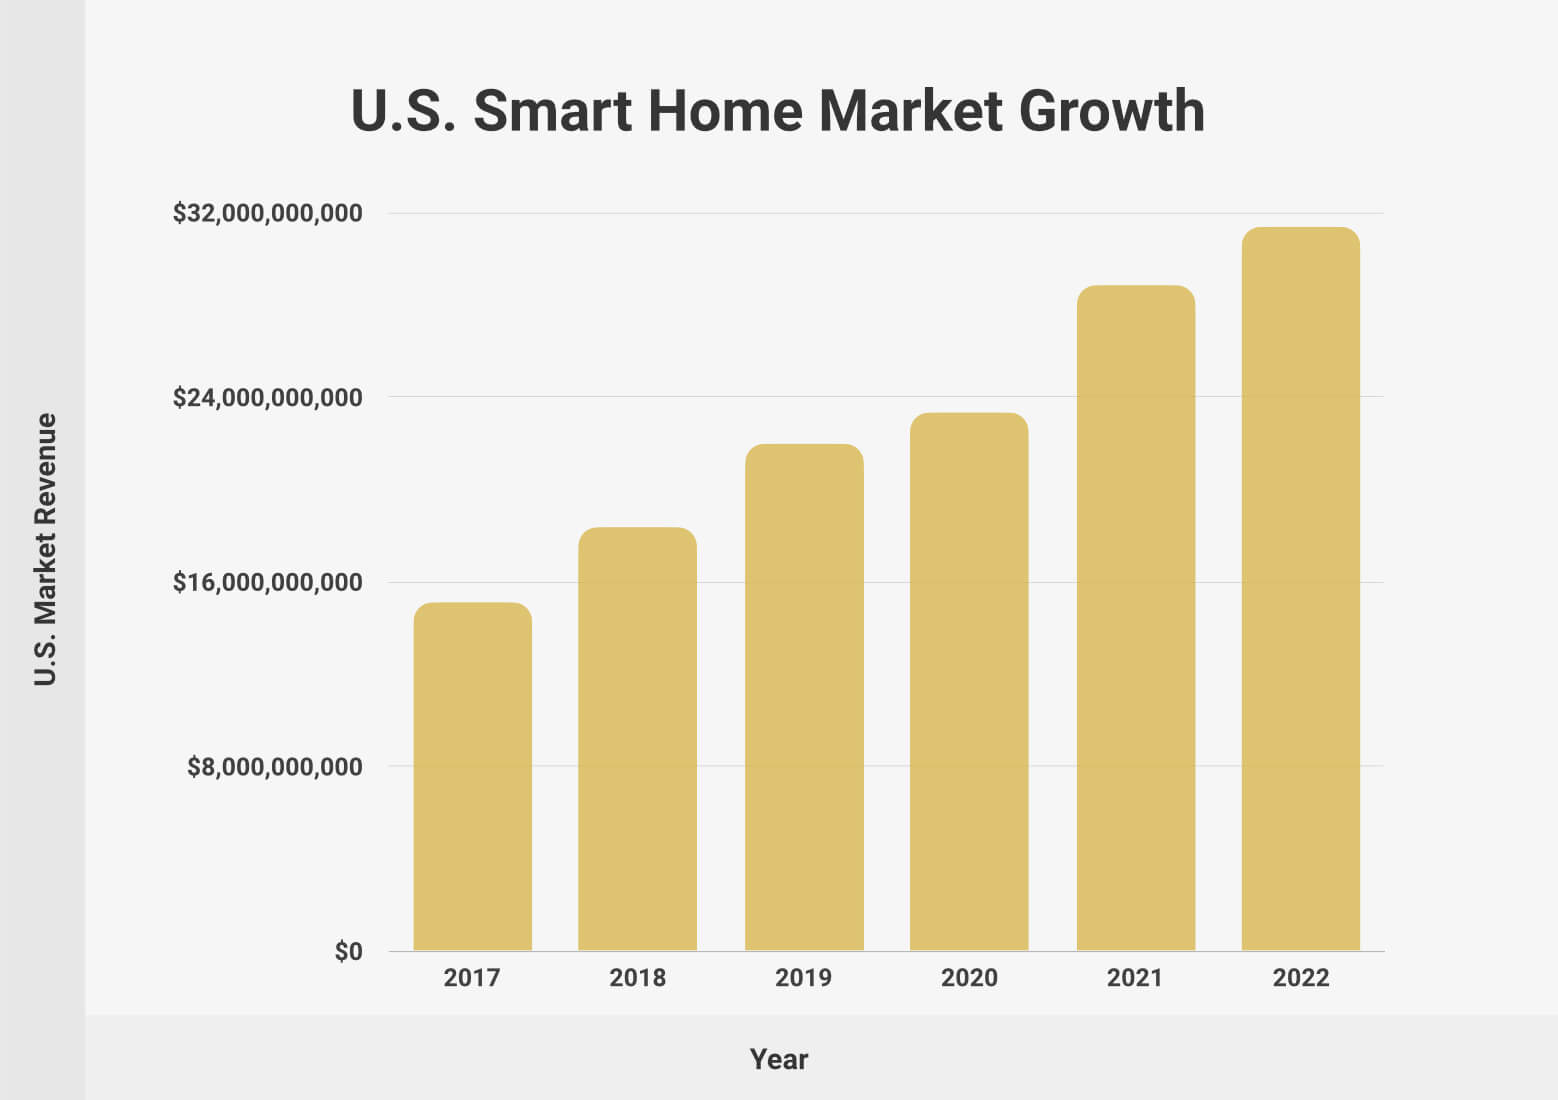 U.S. Smart Home Market Growth